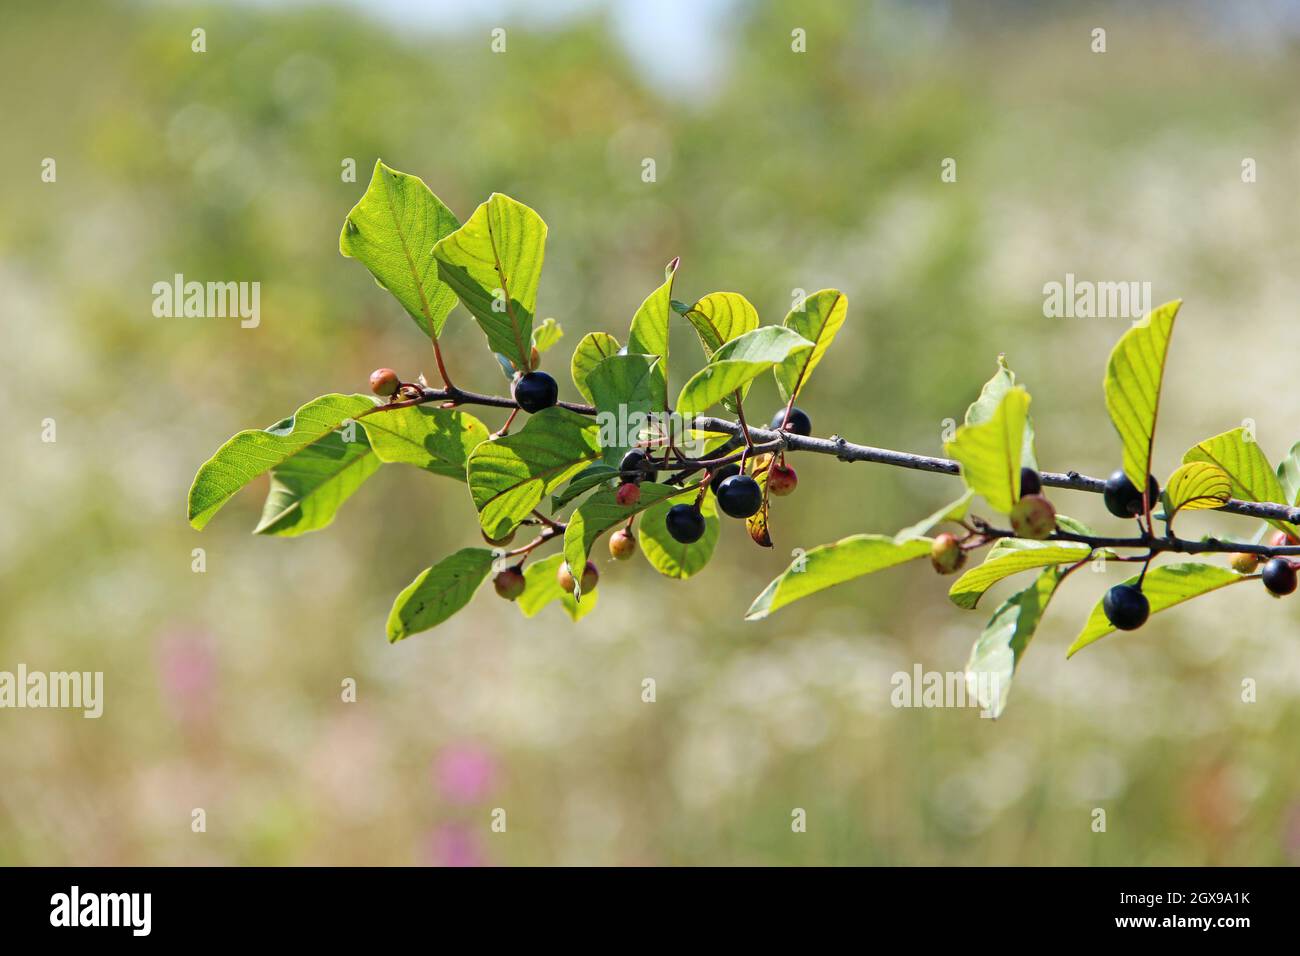 Branches of Frangula alnus with with black berries close up. Fruits of Frangula alnus. Herbal medicine Stock Photo